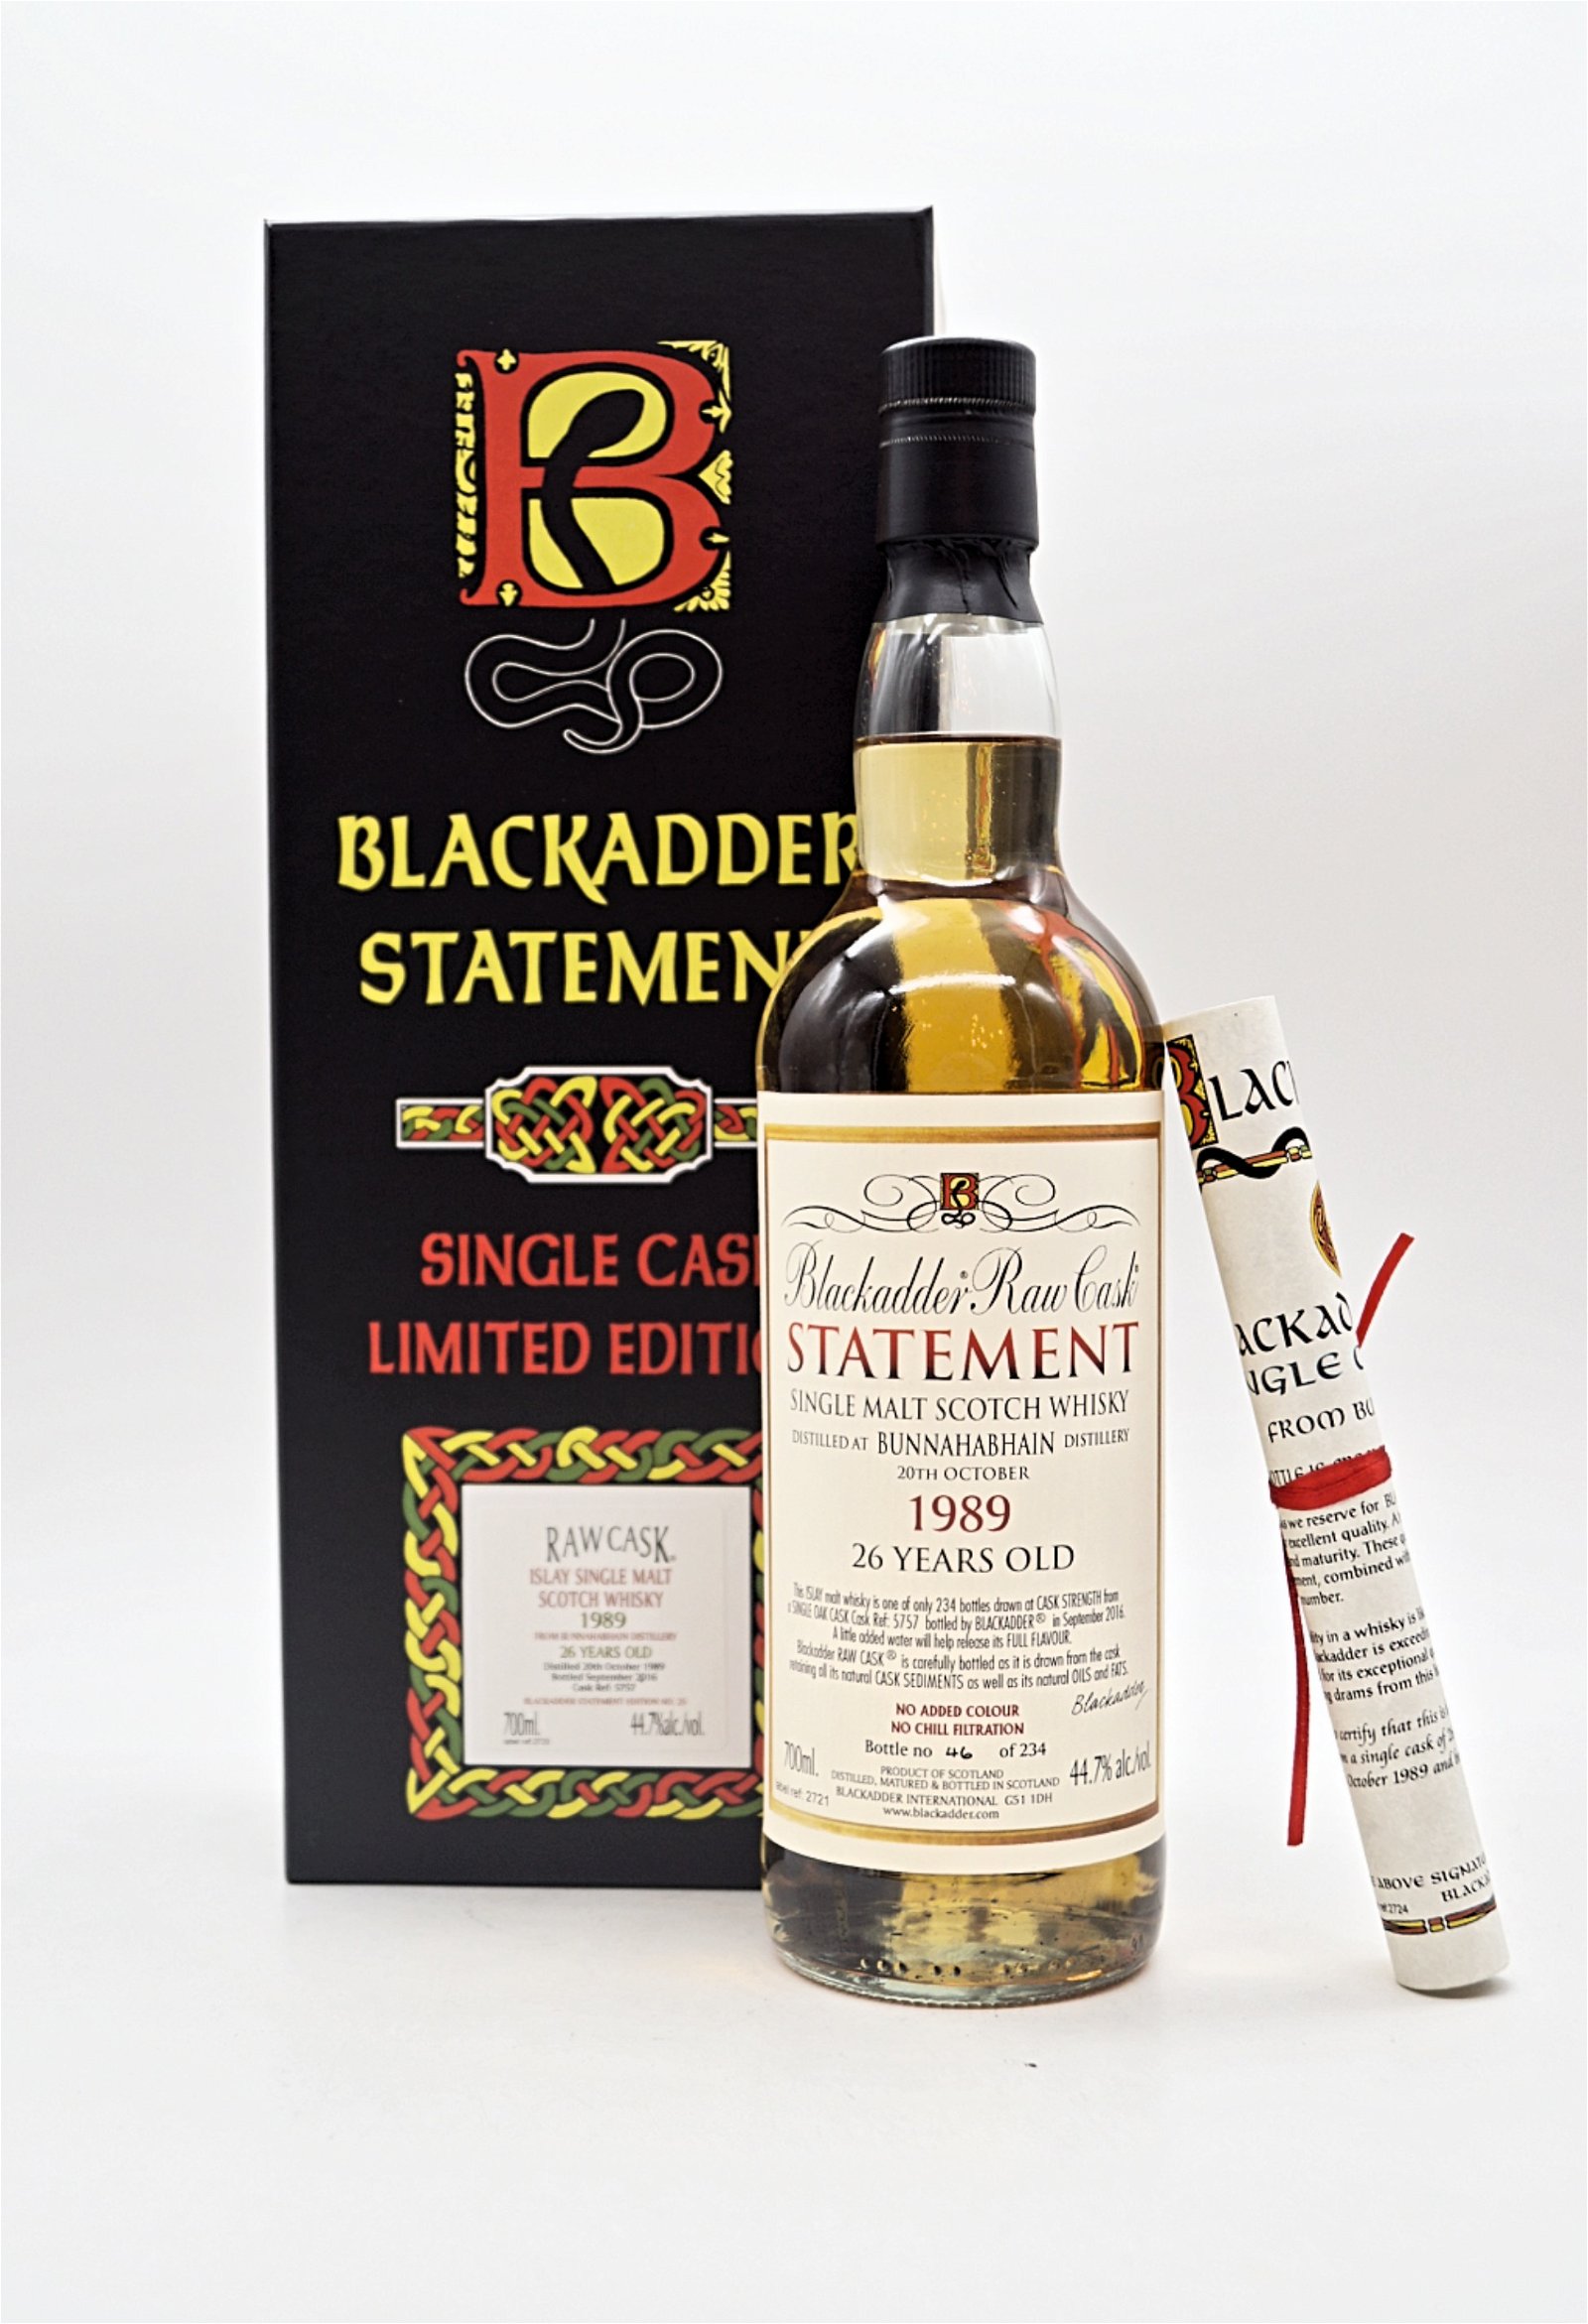 Blackadder 26 Jahre Bunnahabhain Raw Cask Statement No 5757 Limited Edition Single Malt Scotch Whisky